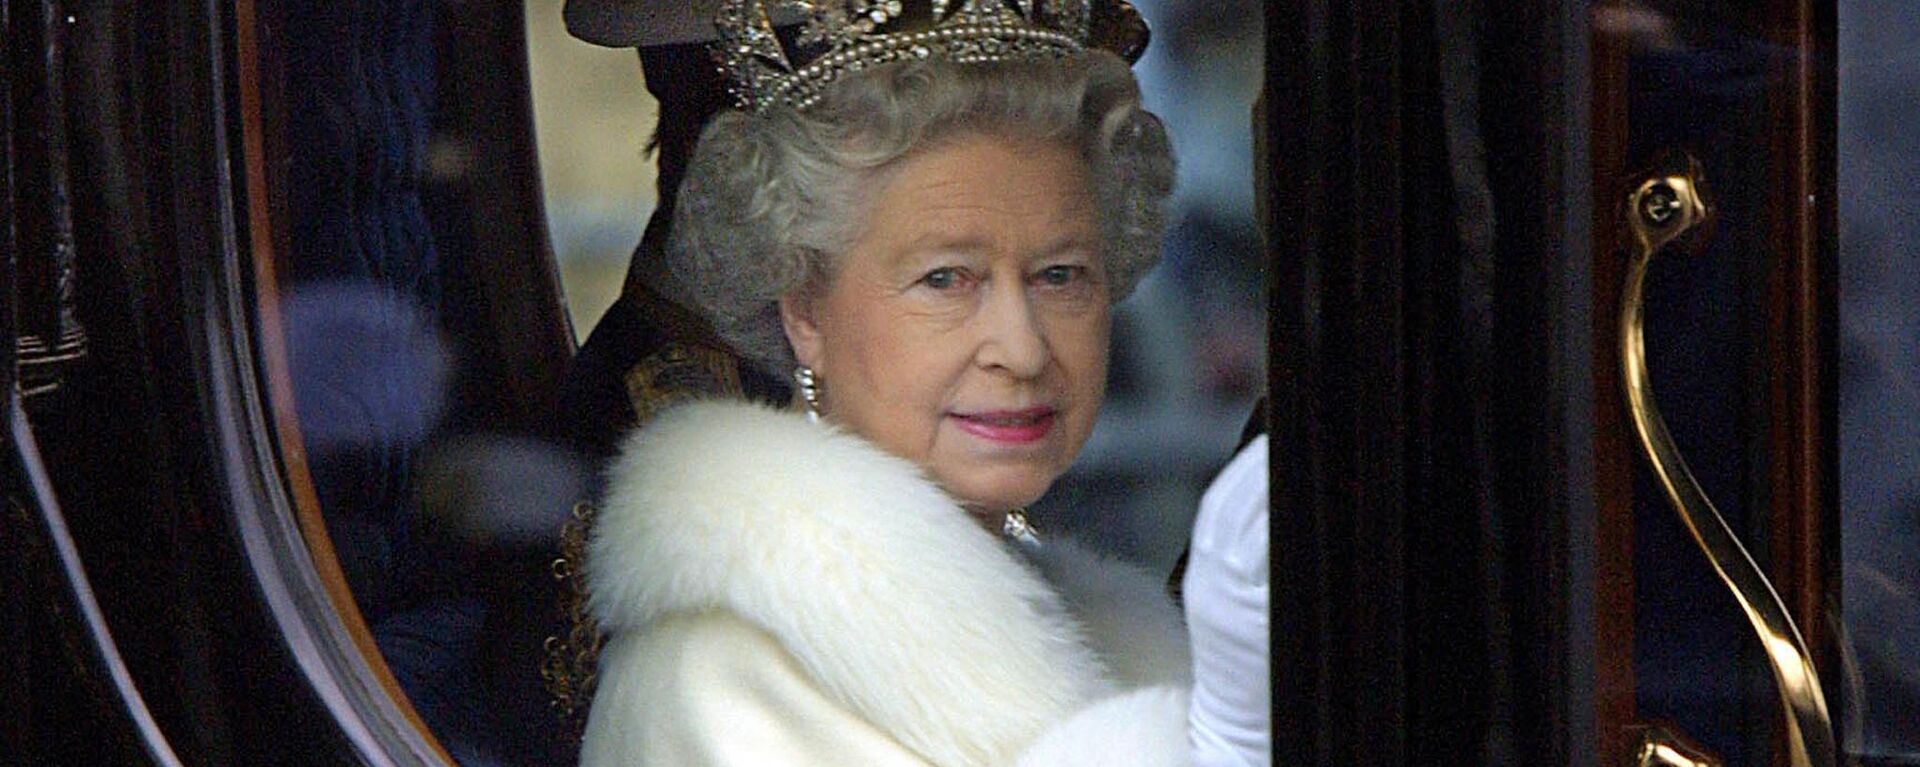 Королева Елизавета II в карете, Лондон, 2000 год - Sputnik Кыргызстан, 1920, 09.09.2022